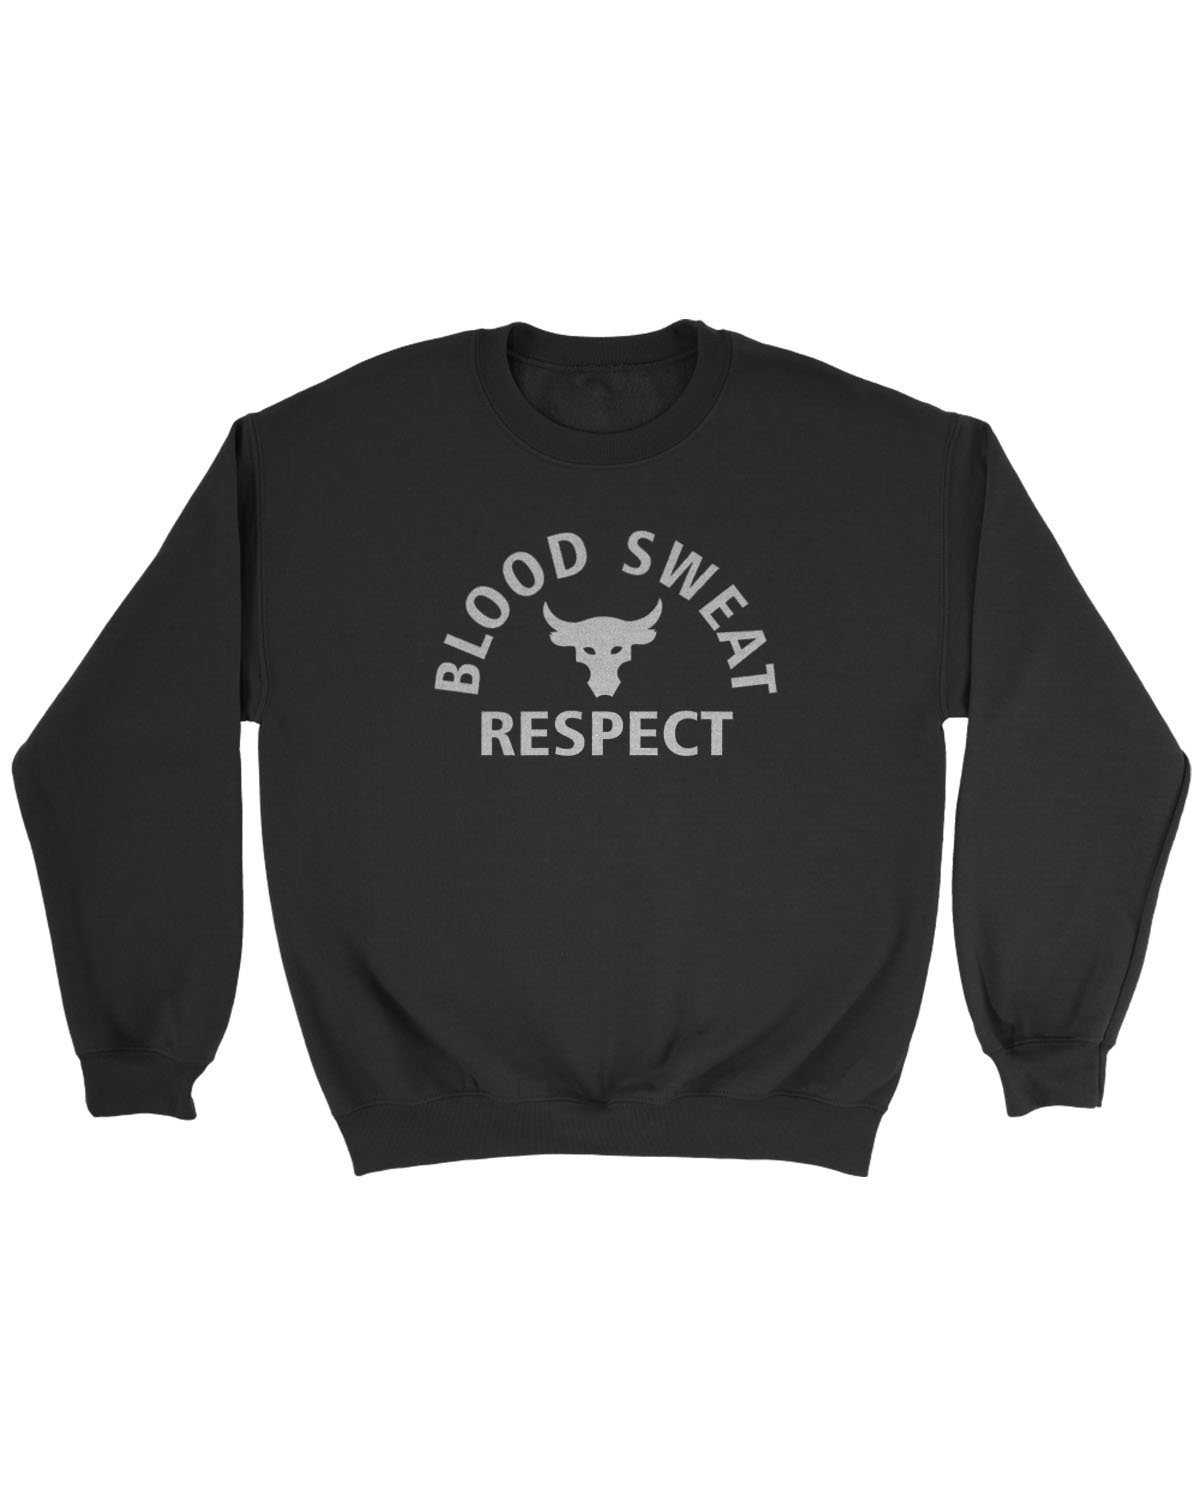 Blood Sweat Respect The Rock Sweatshirt